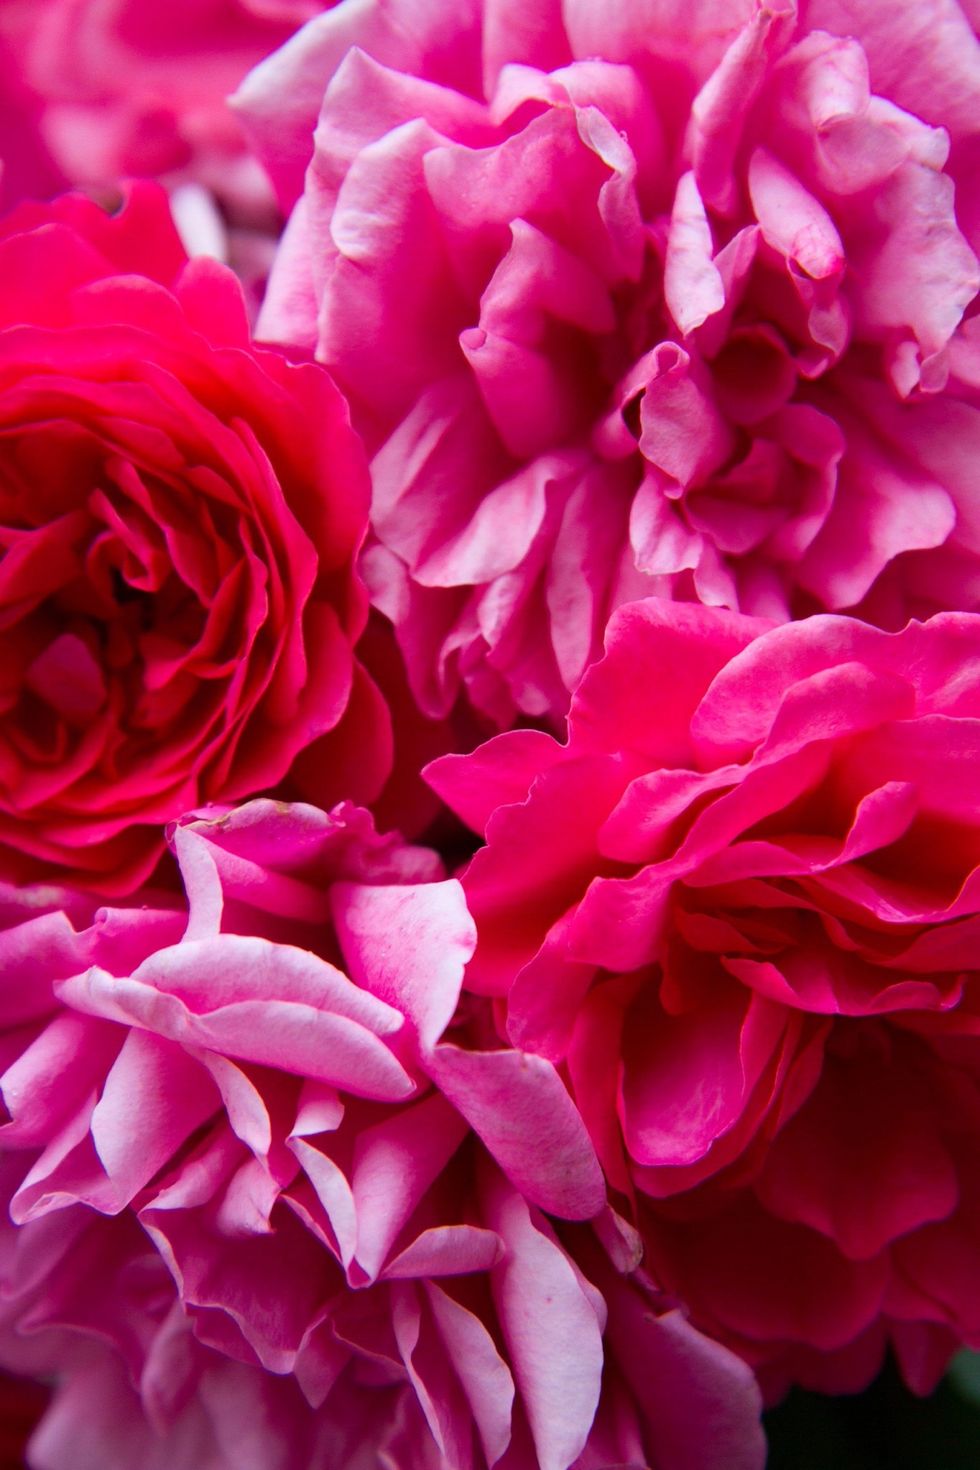 Petal, Flower, Red, Magenta, Pink, Colorfulness, Botany, Flowering plant, Rose family, Close-up, 